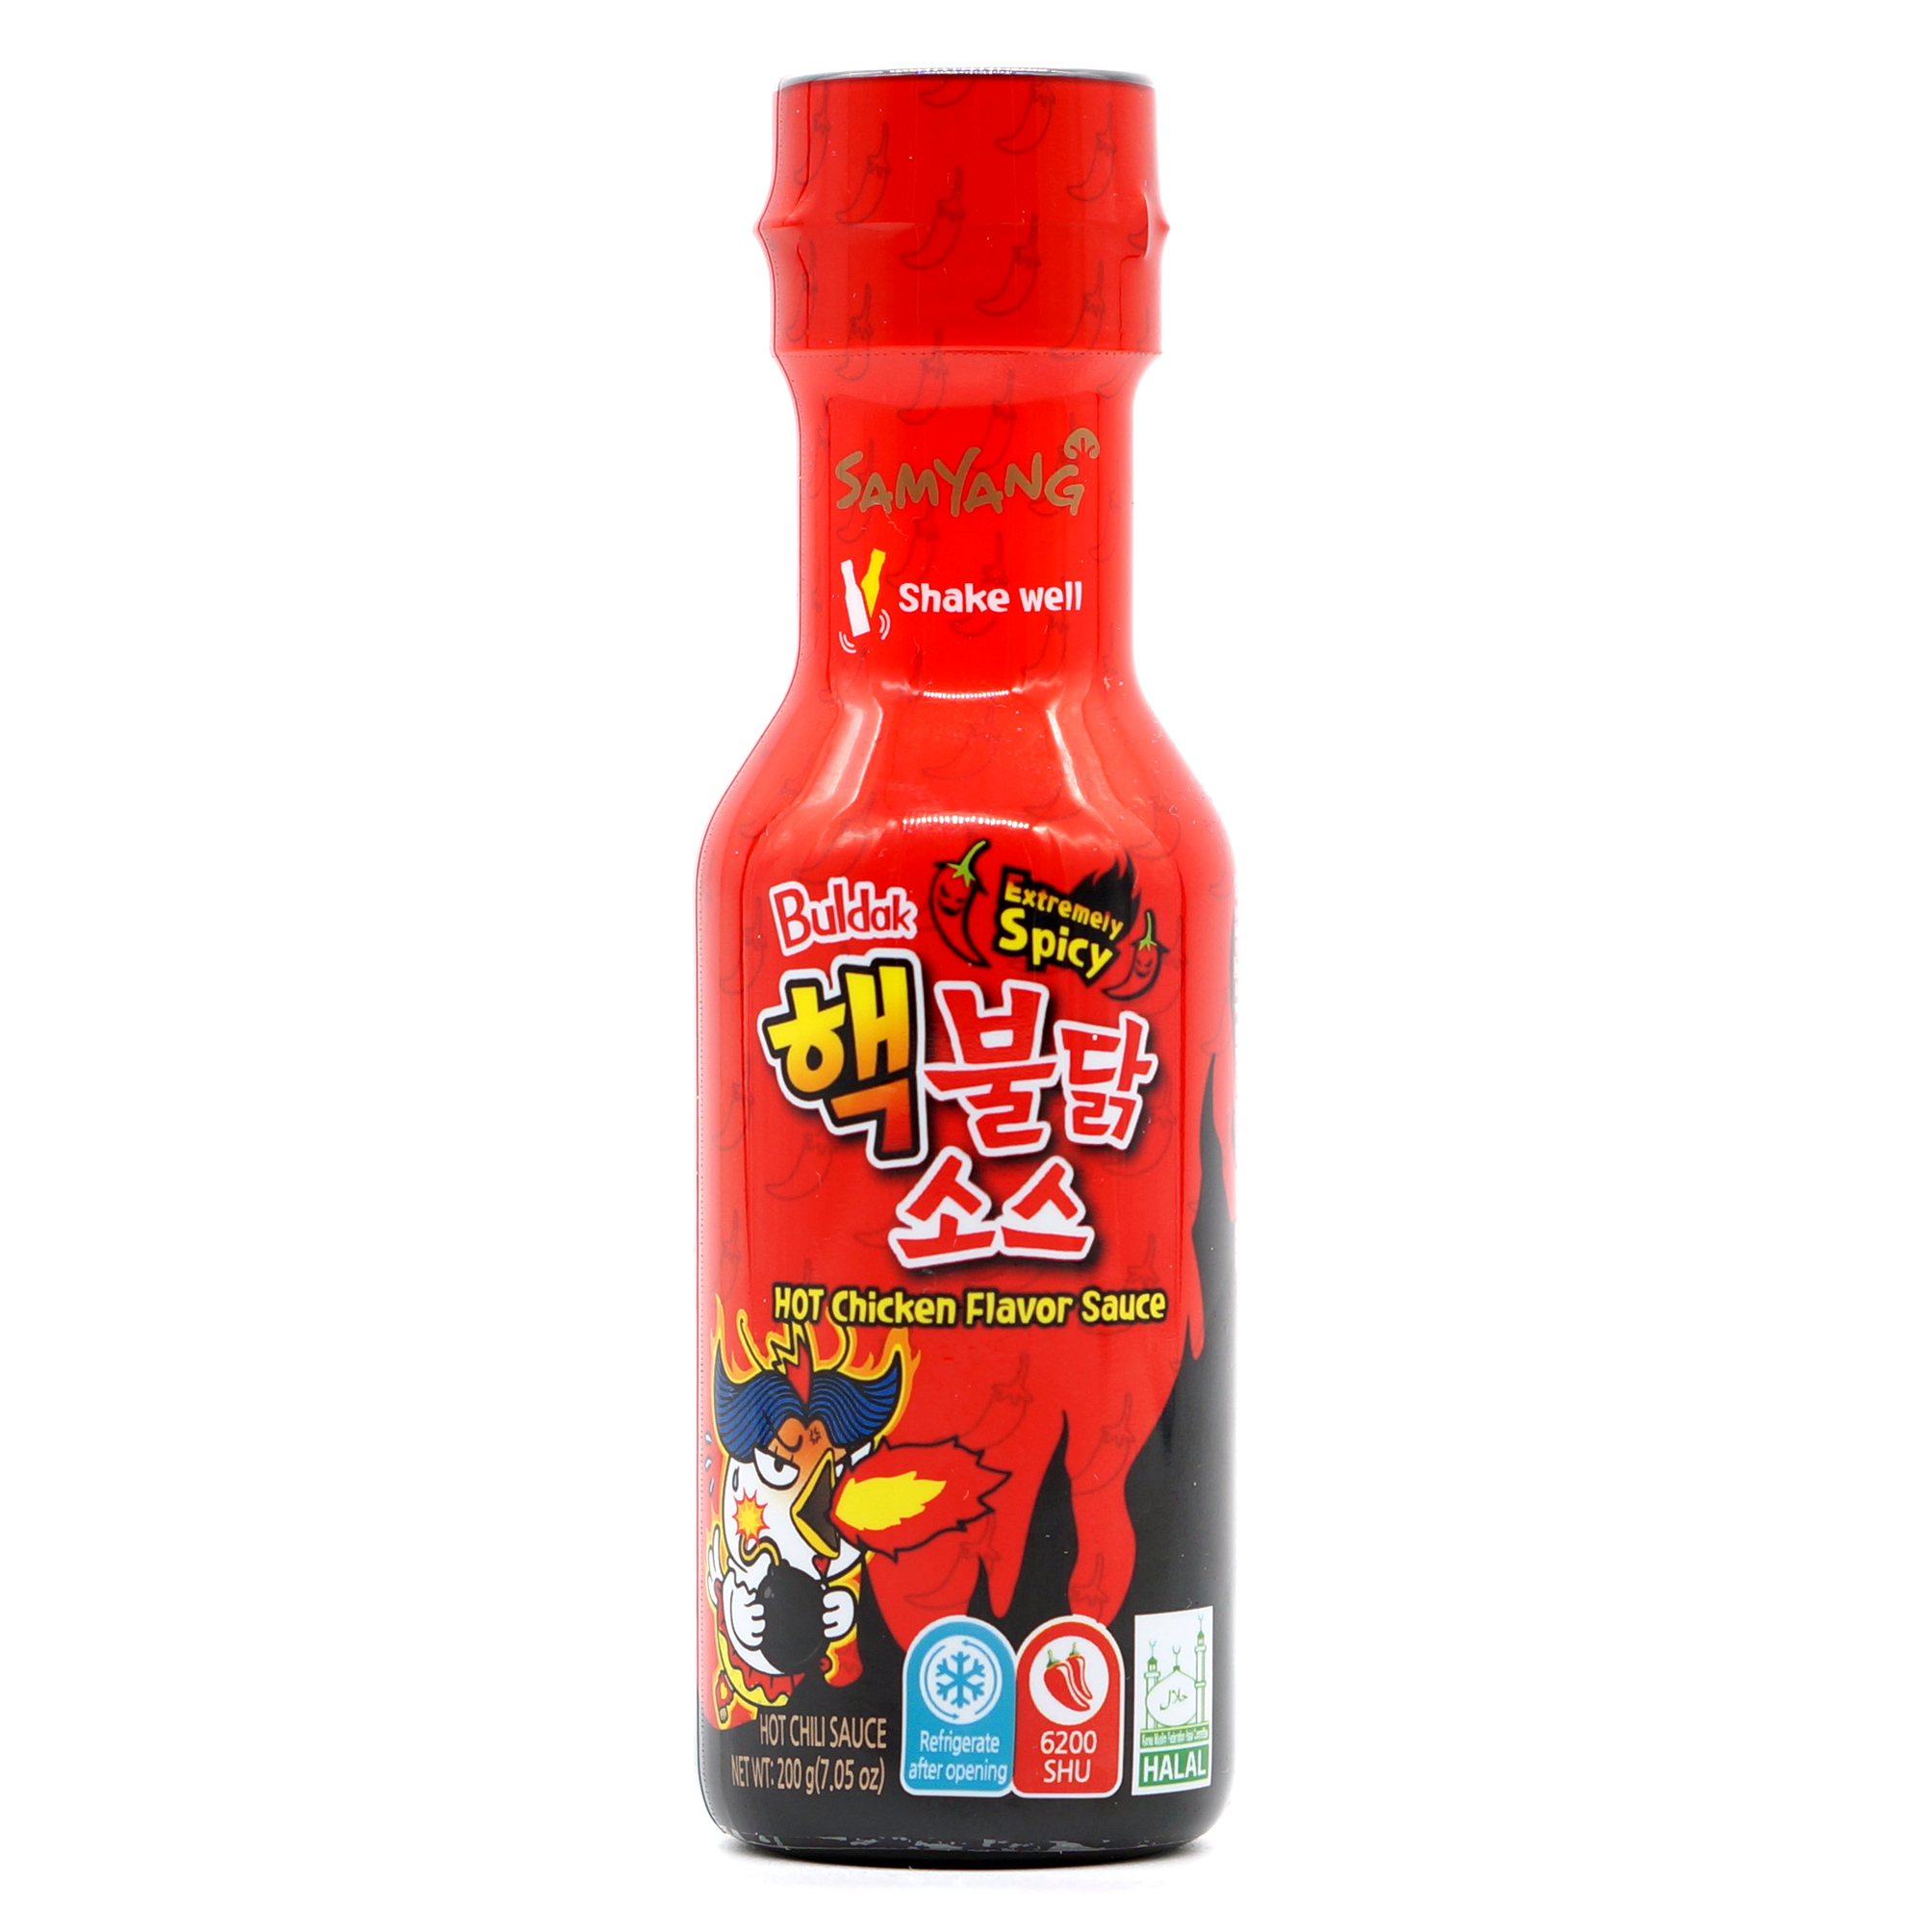 Buldak extrem scharfe Sauce mit Hühnchengeschmack - Samyang - 200g